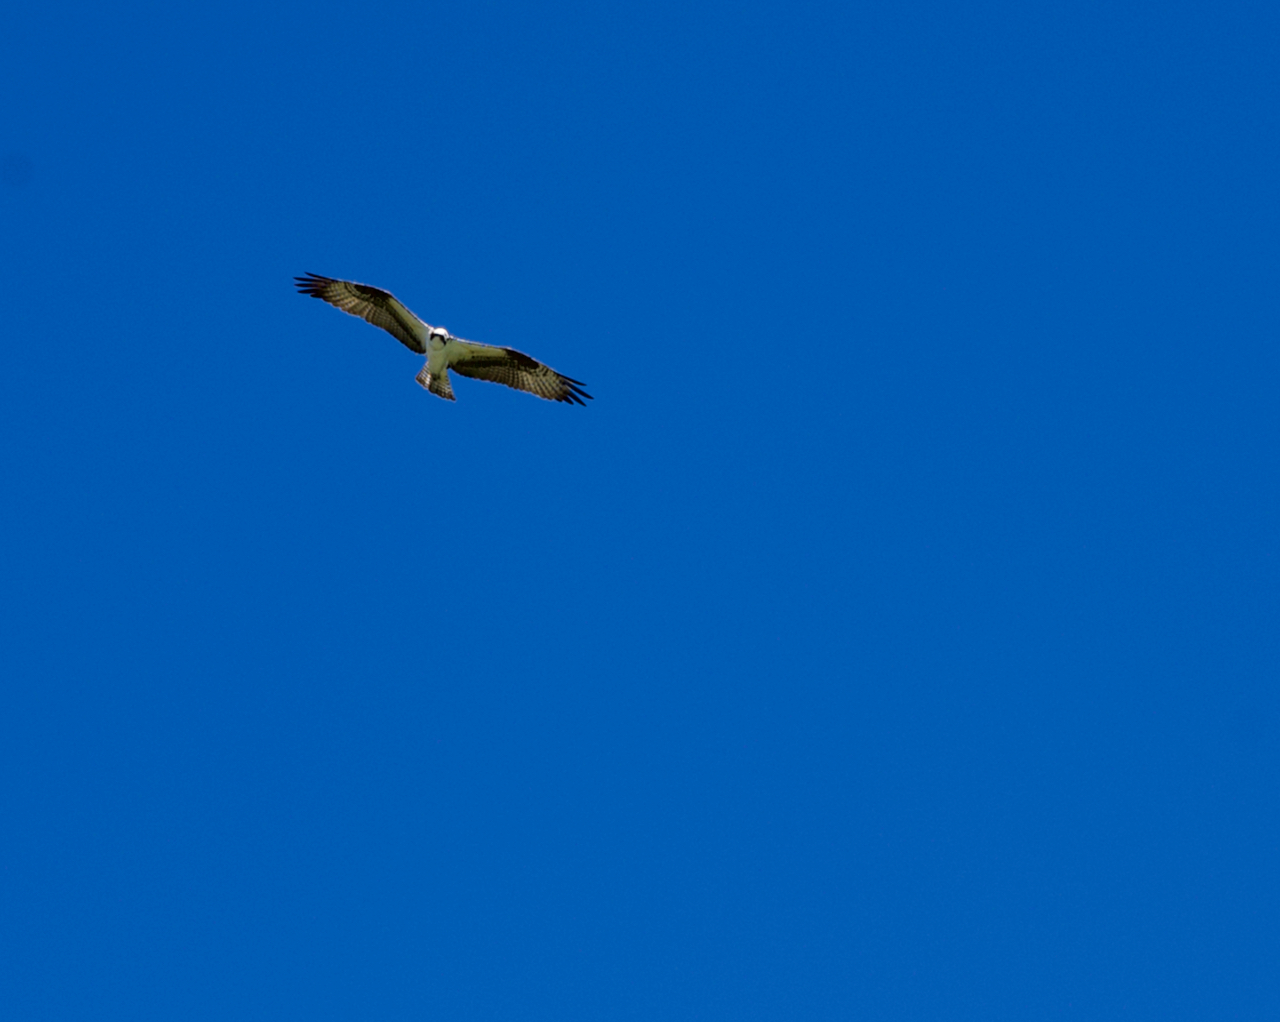 A bird soaring against blue sky.